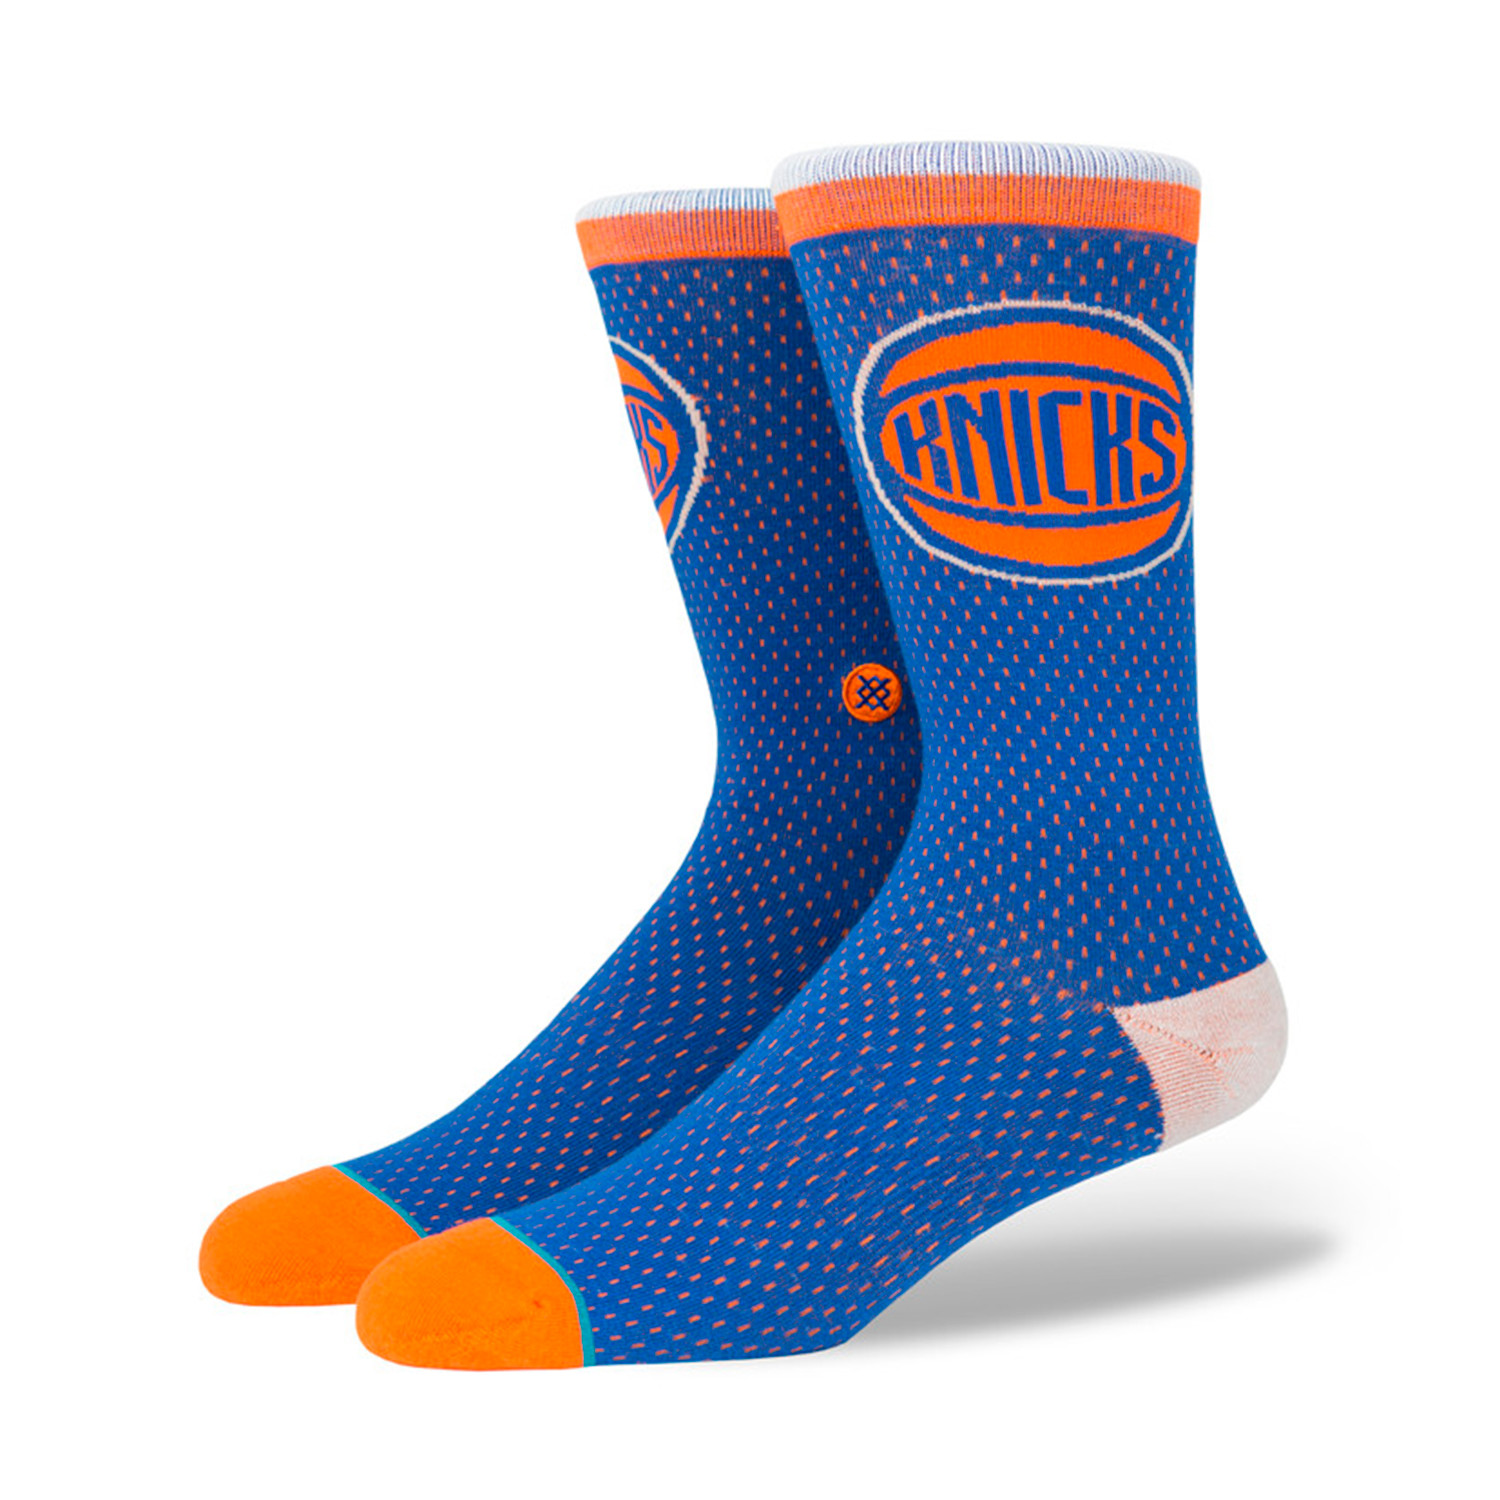 Knicks Jersey Socks // Blue (S) - Stance - Touch of Modern